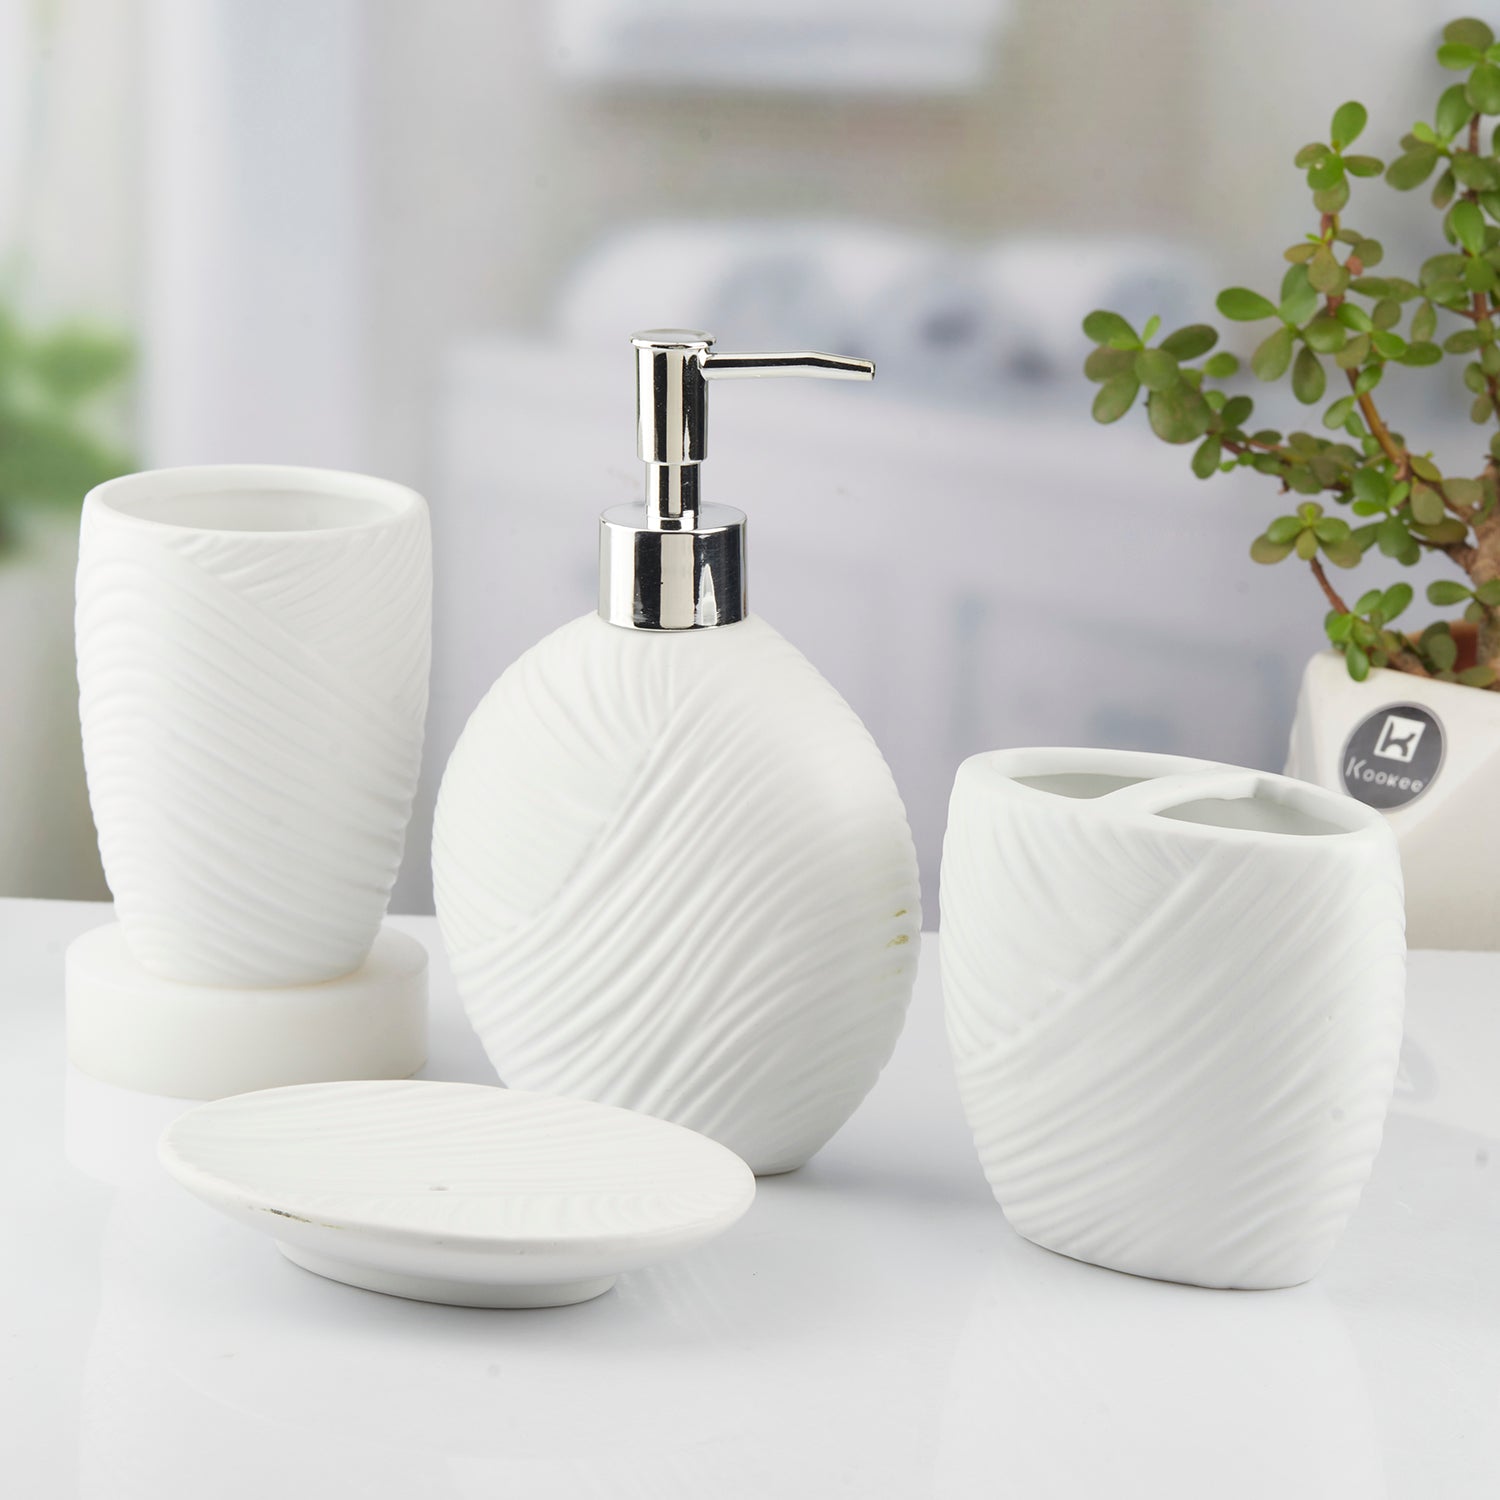 Ceramic Bathroom Set of 4 with Soap Dispenser (10431)